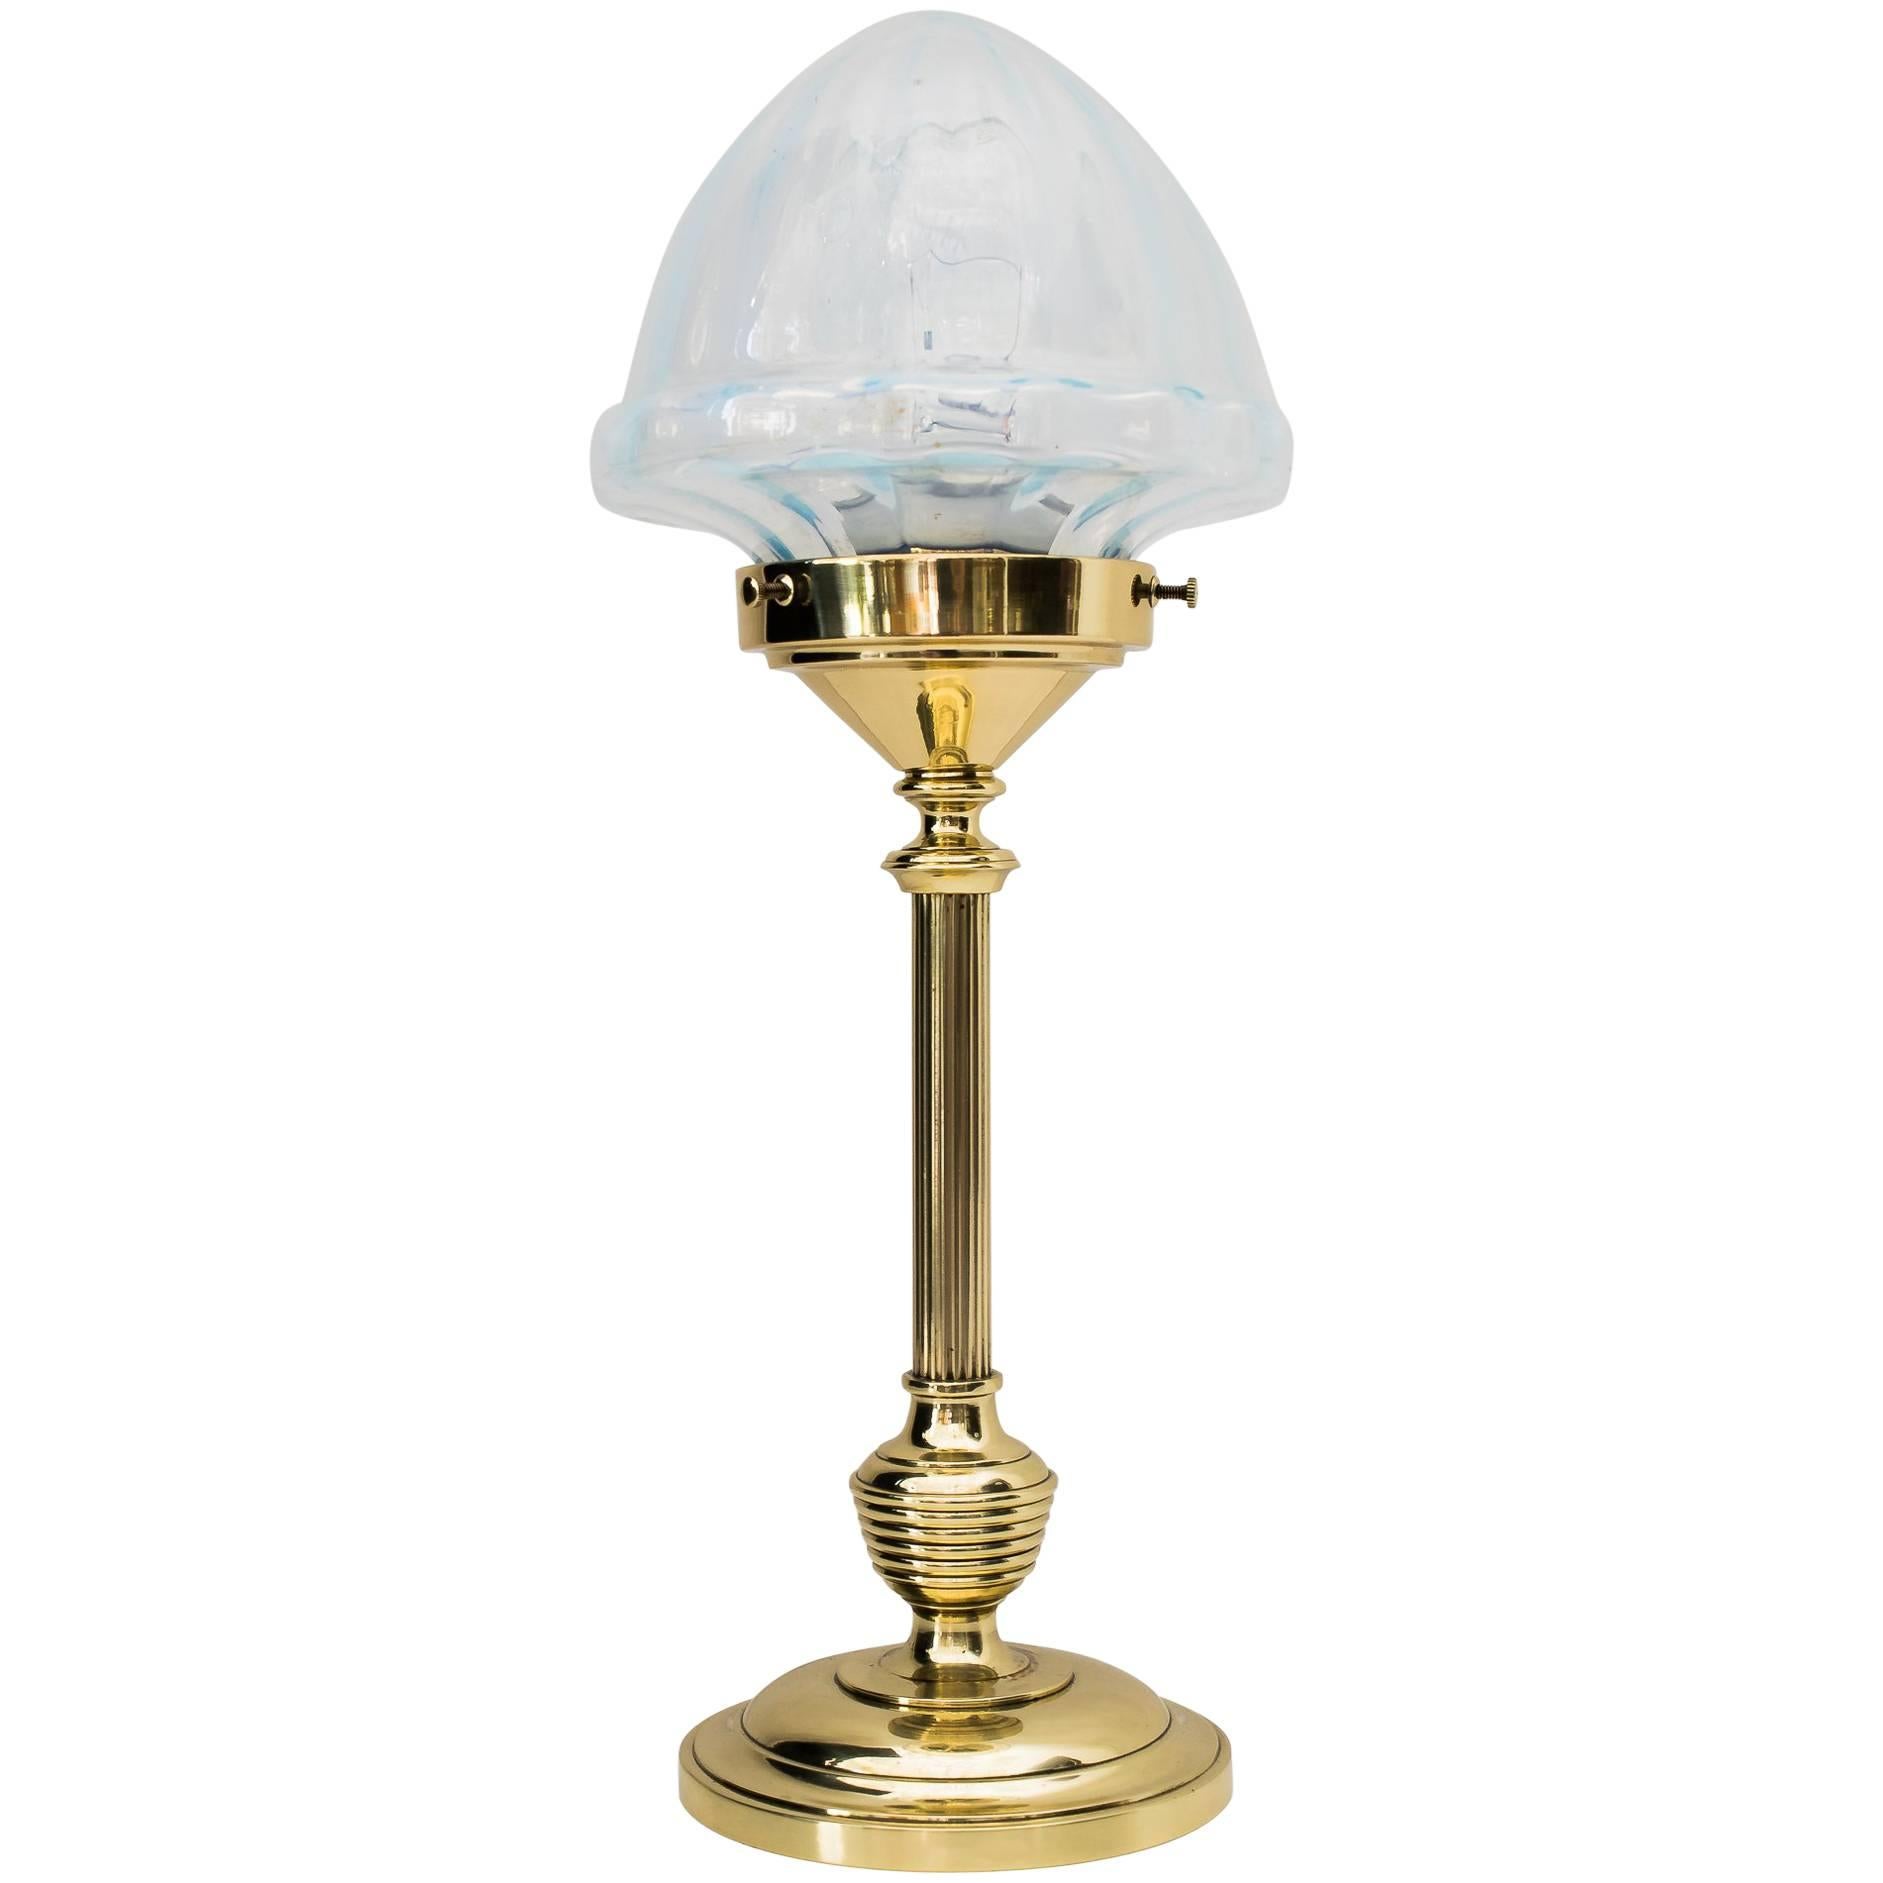 Art-Déco-Tischlampe mit Opalglasschirm